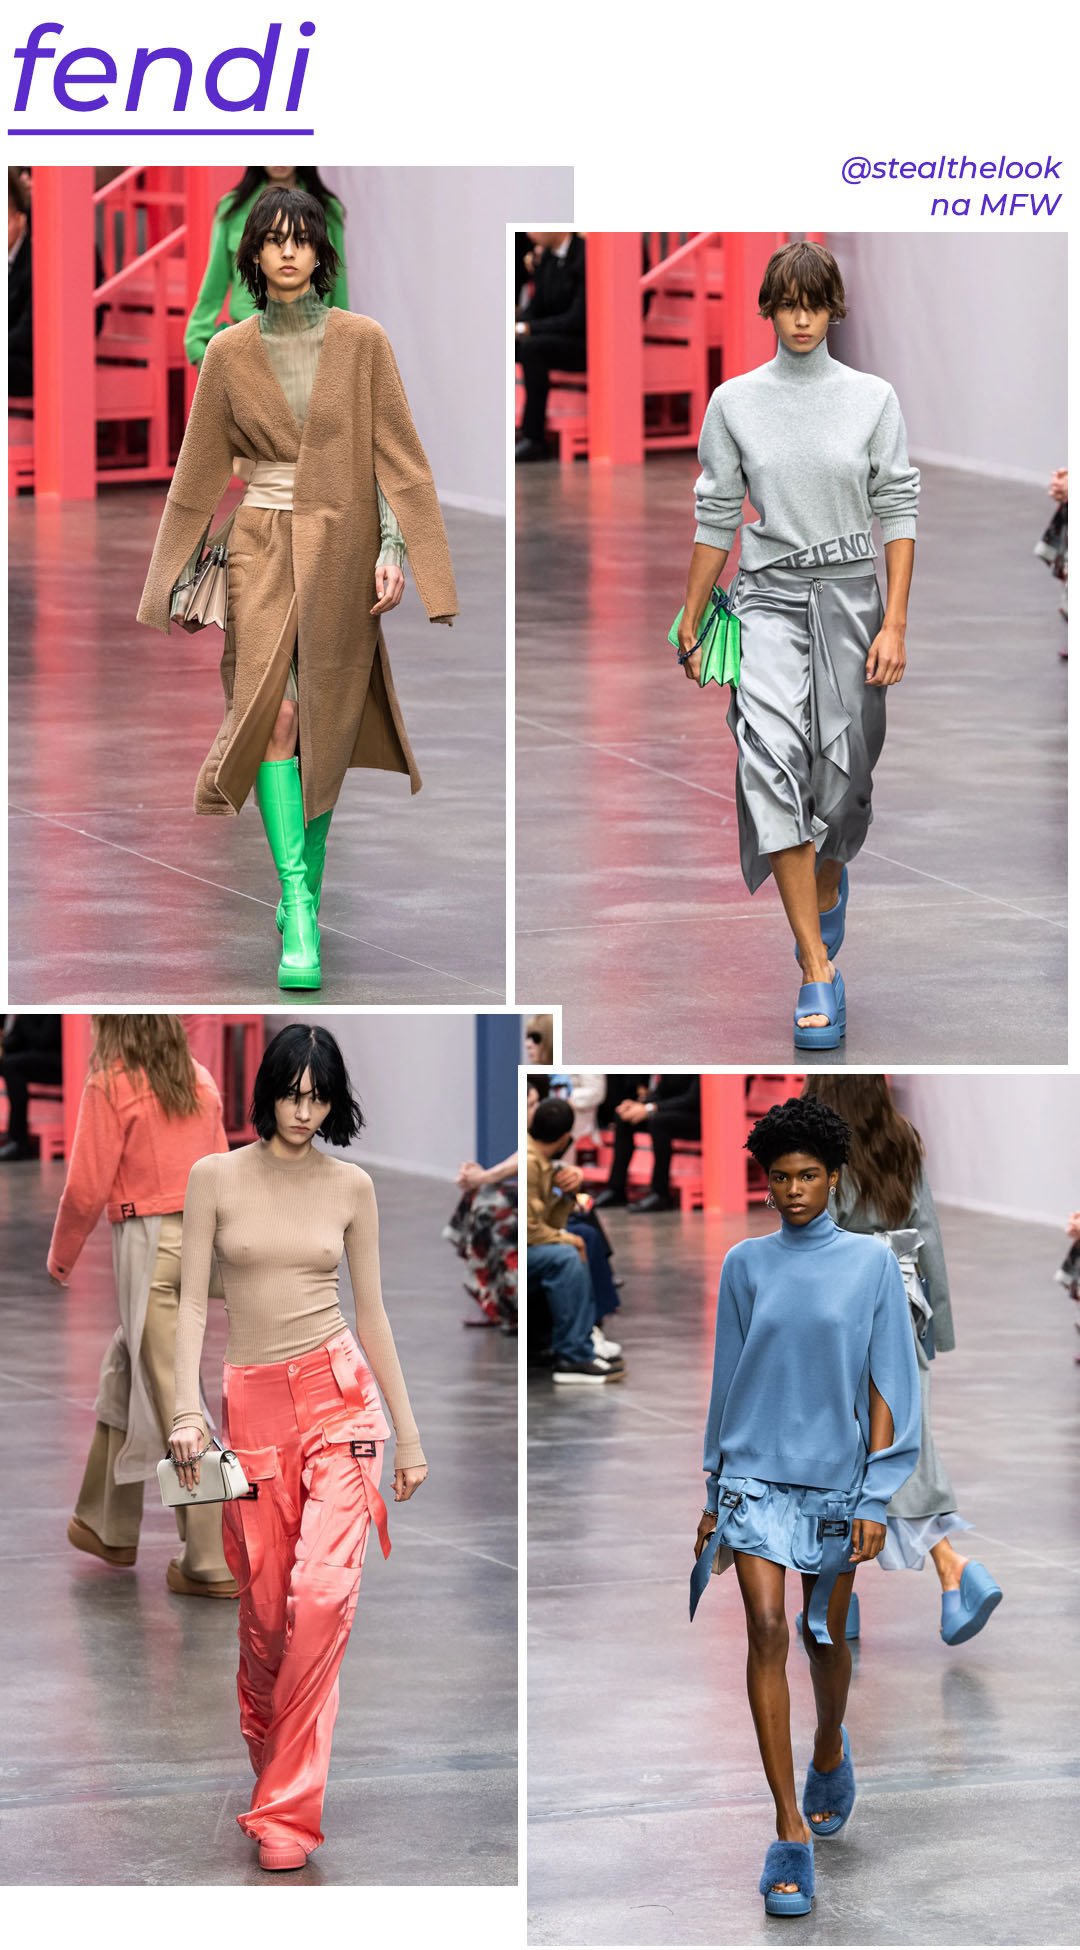 Fendi S/S 2023 - roupas diversas - Milano Fashion Week - Primavera - modelo andando pela passarela - https://stealthelook.com.br